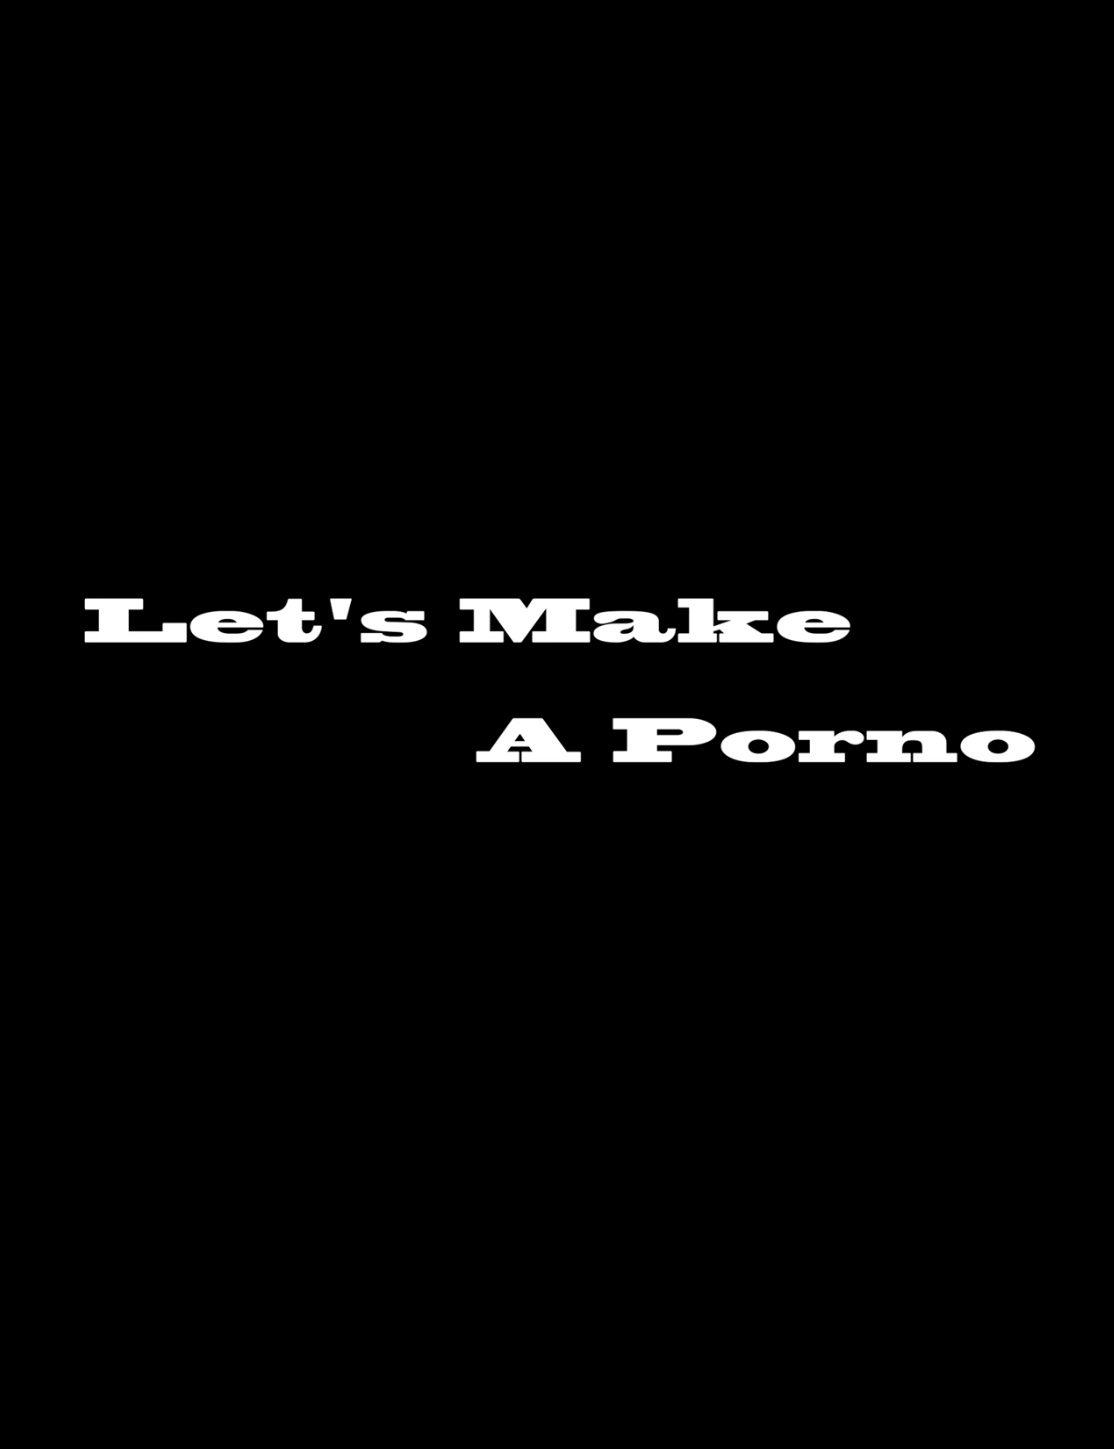 djordje zivanovic recommends Lets Make A Porn